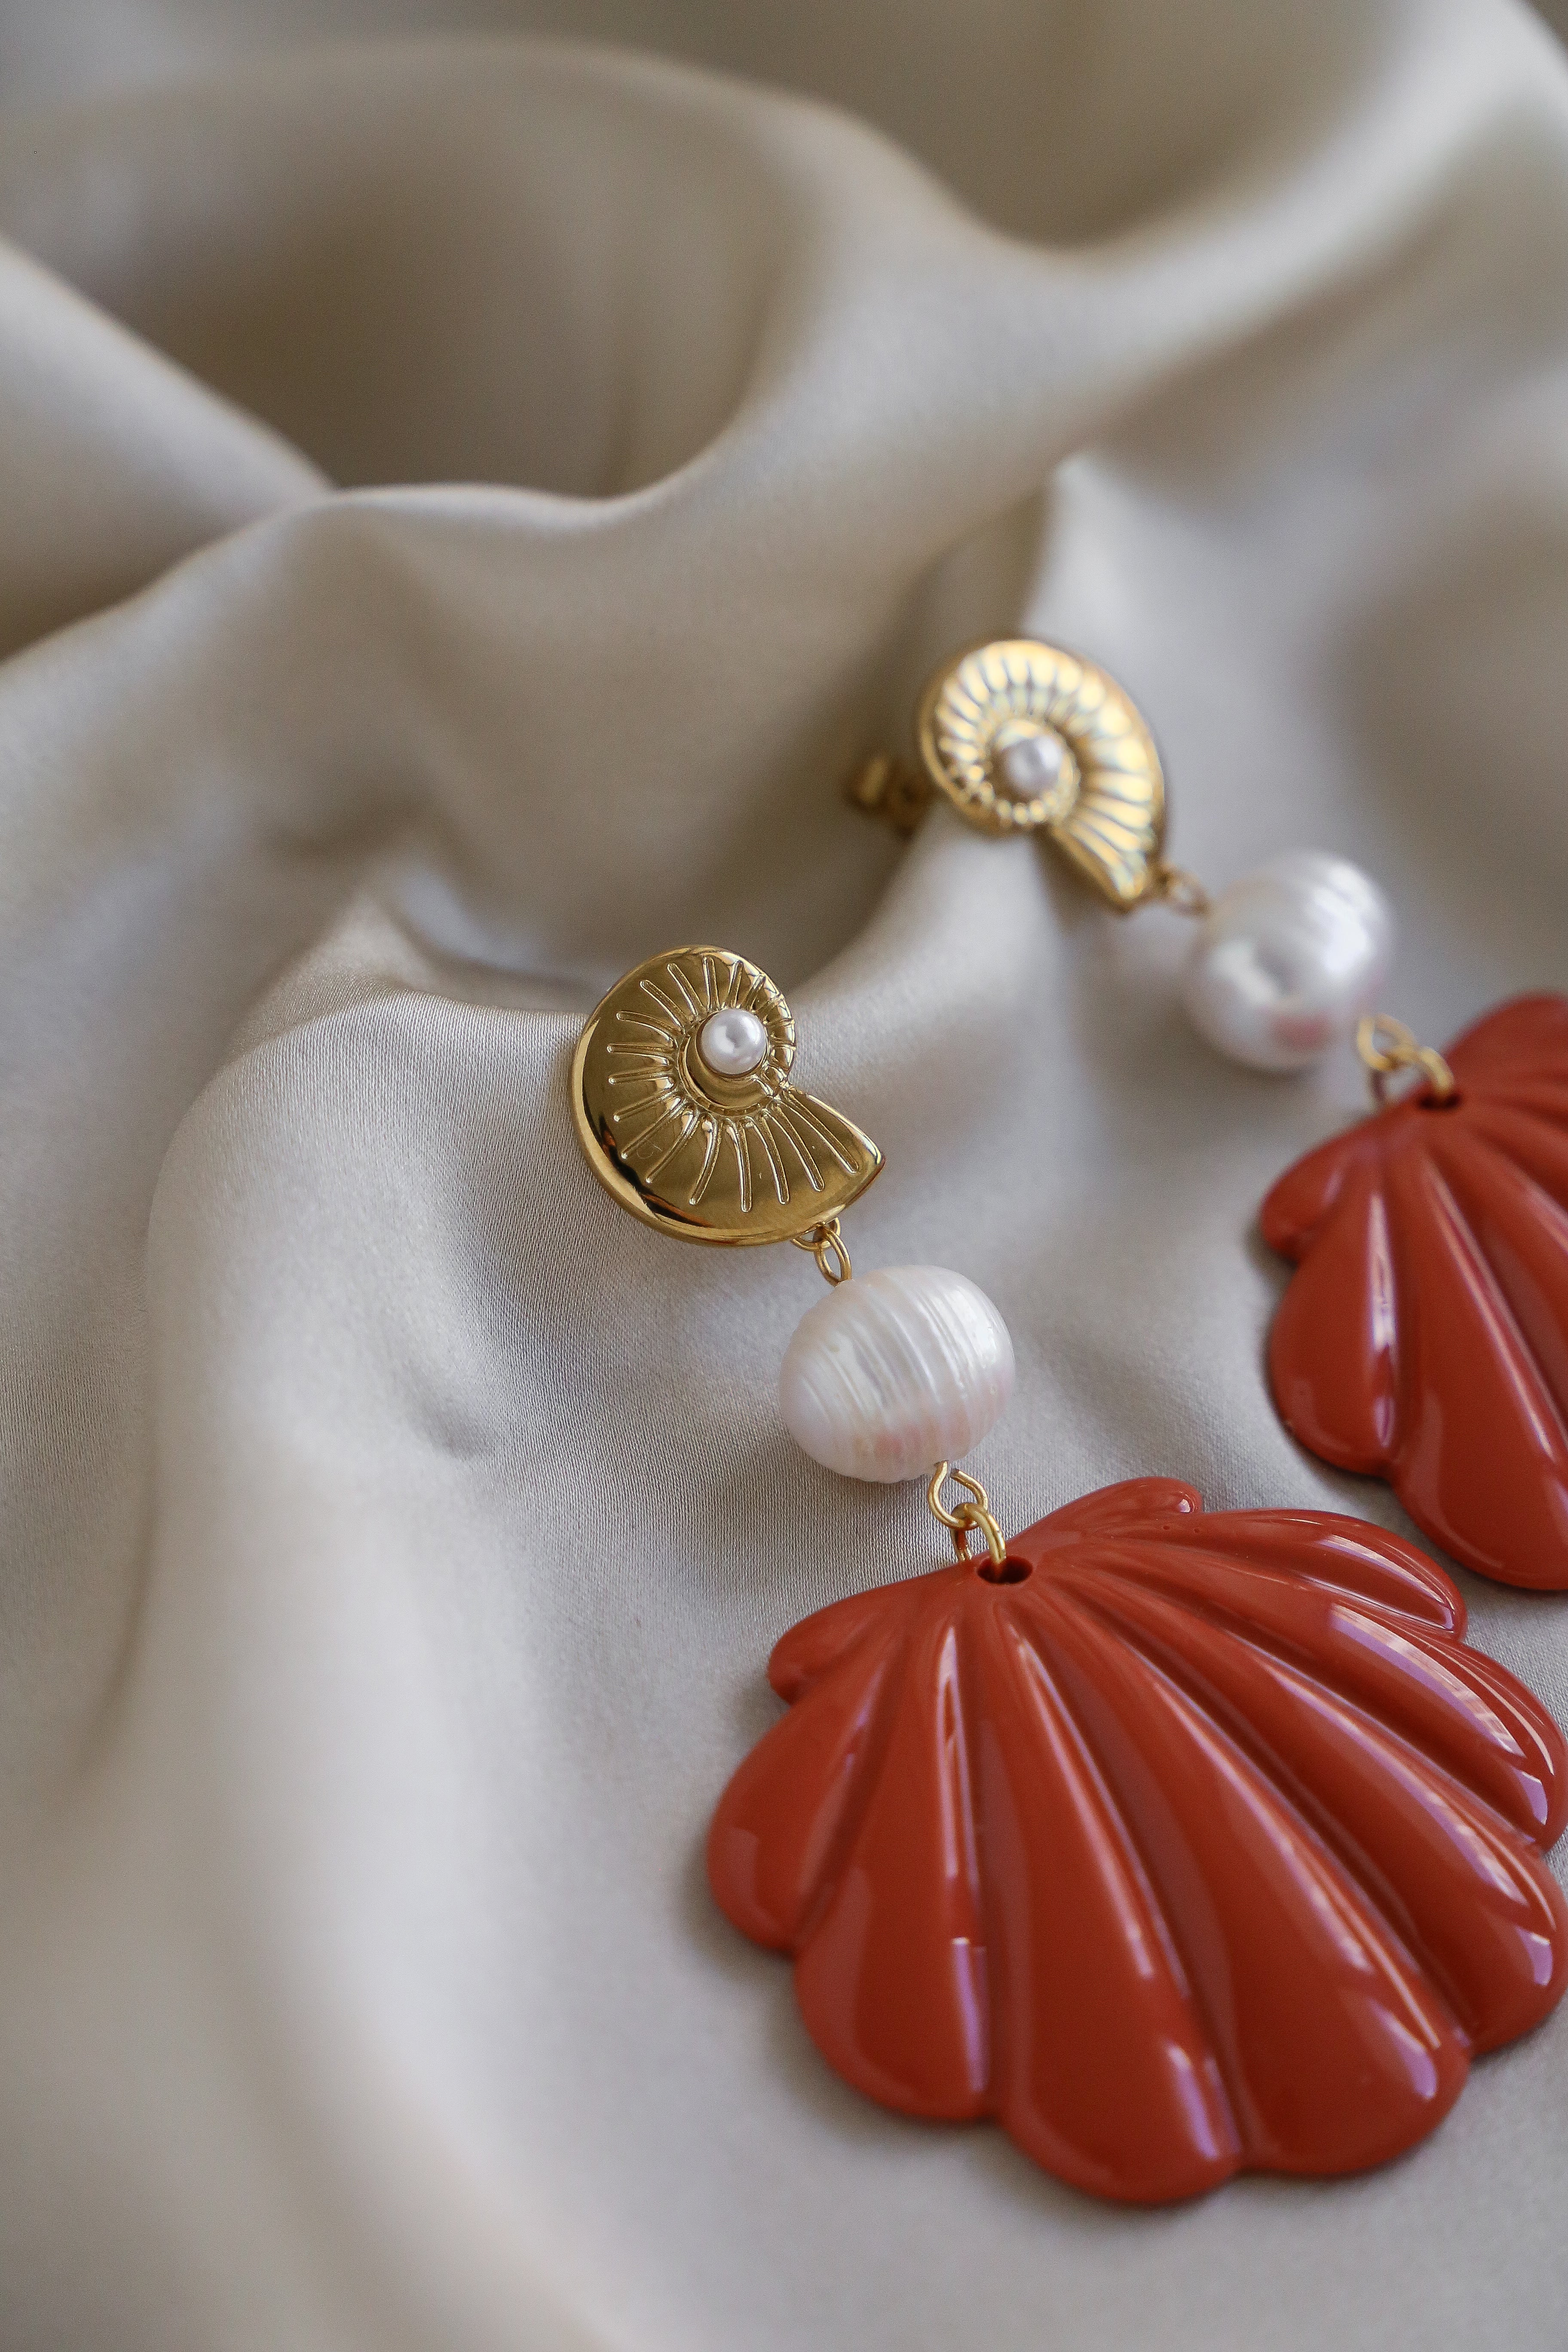 Melodie Earrings - Boutique Minimaliste has waterproof, durable, elegant and vintage inspired jewelry